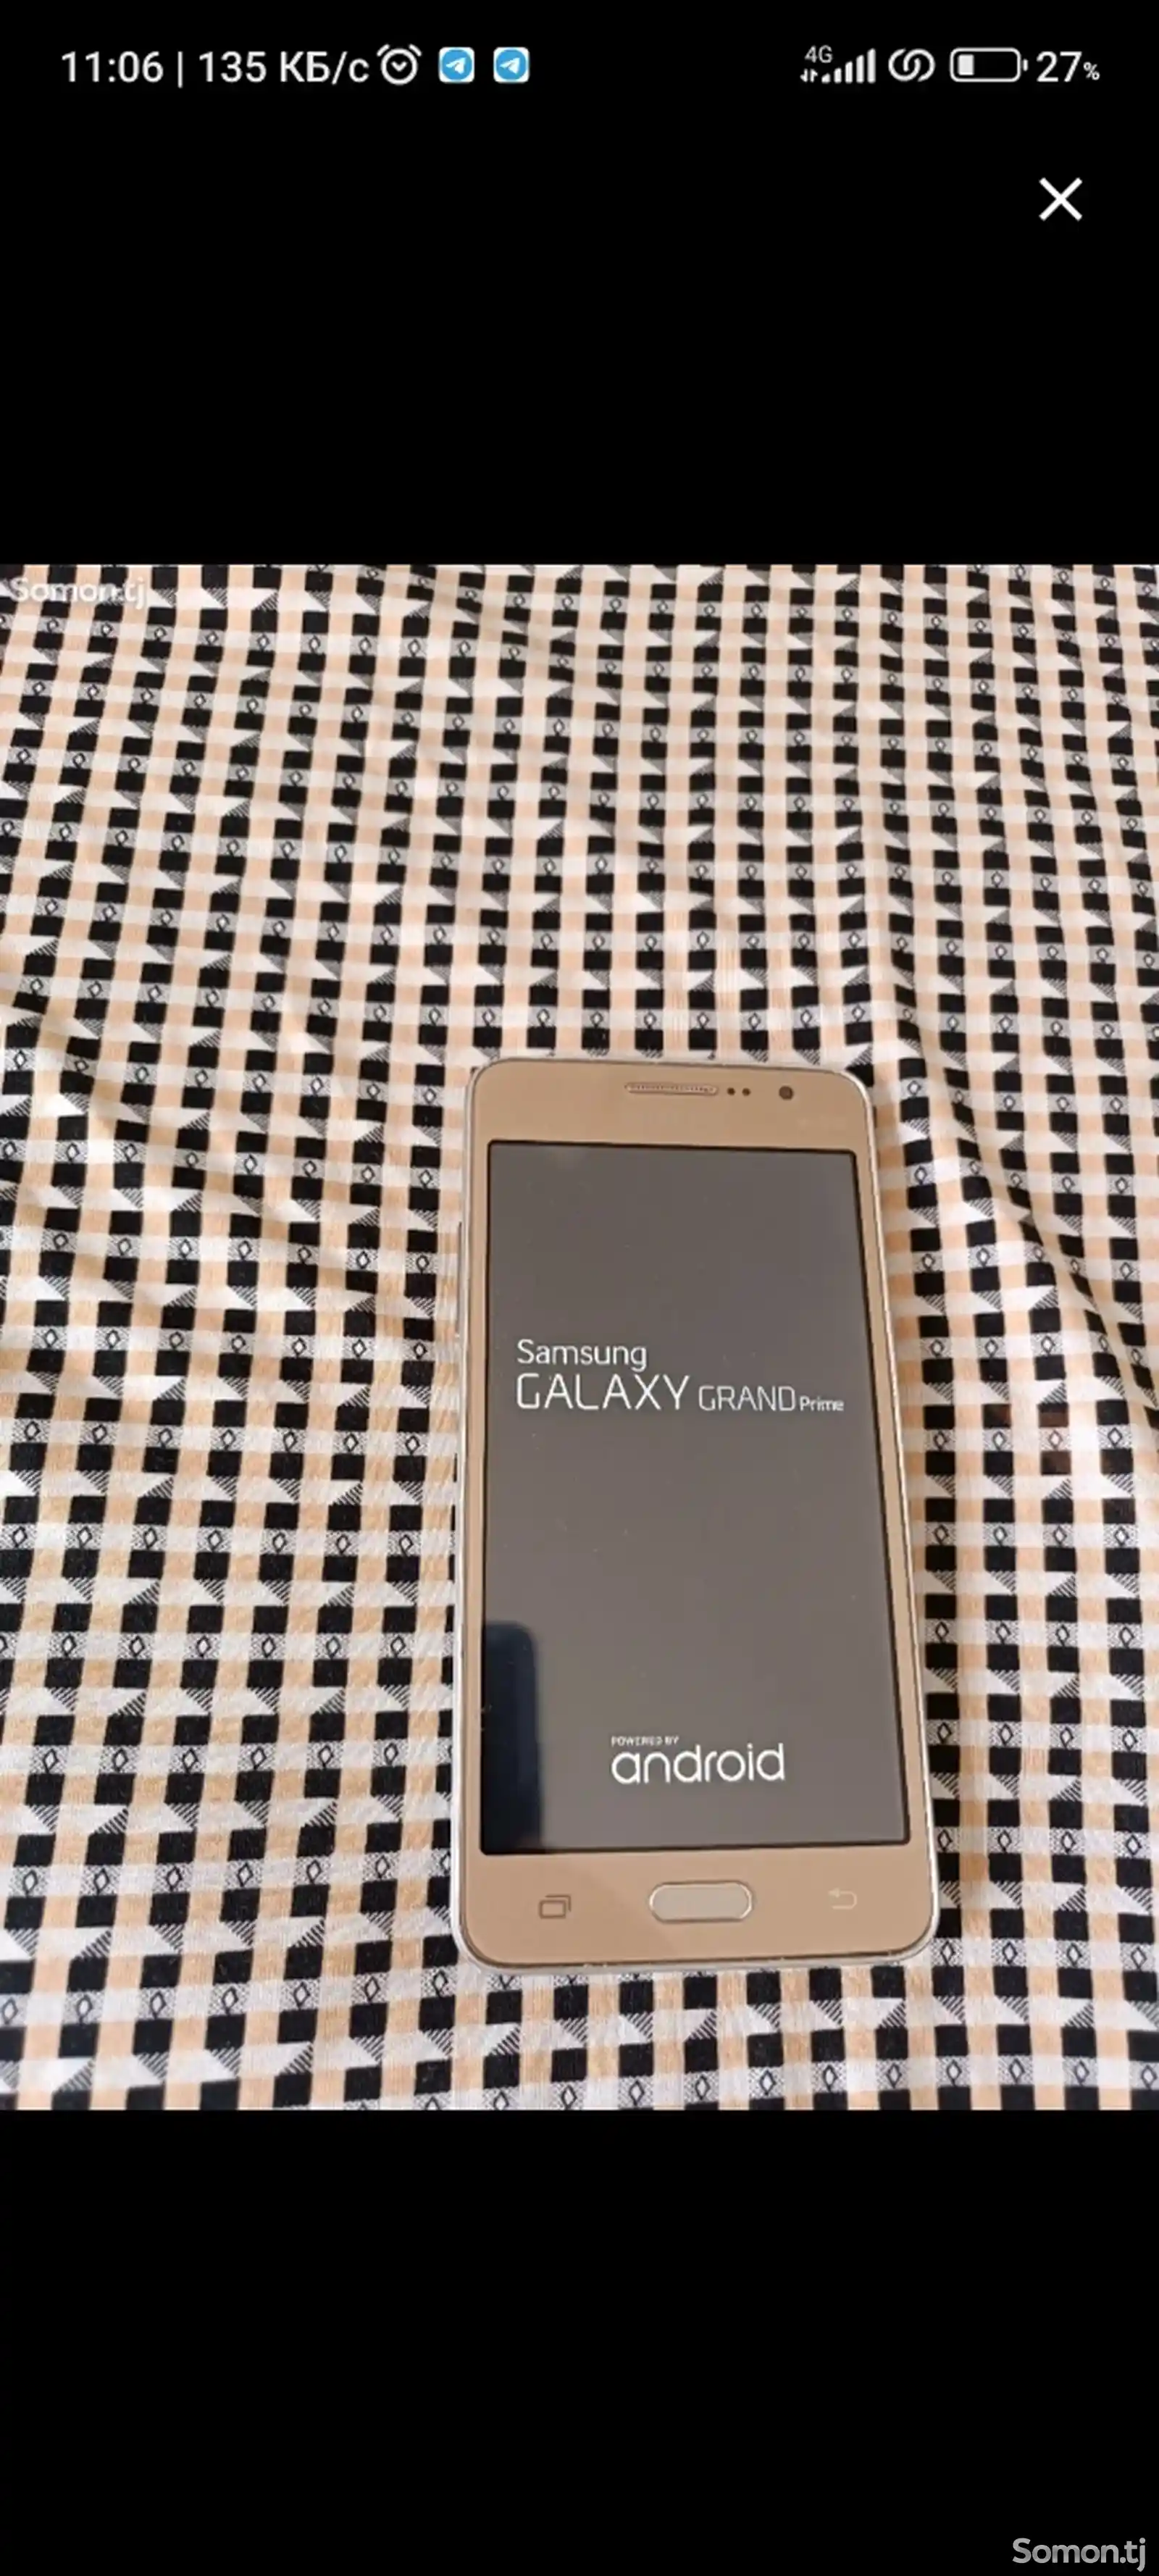 Samsung Galaxy Grand prime-5